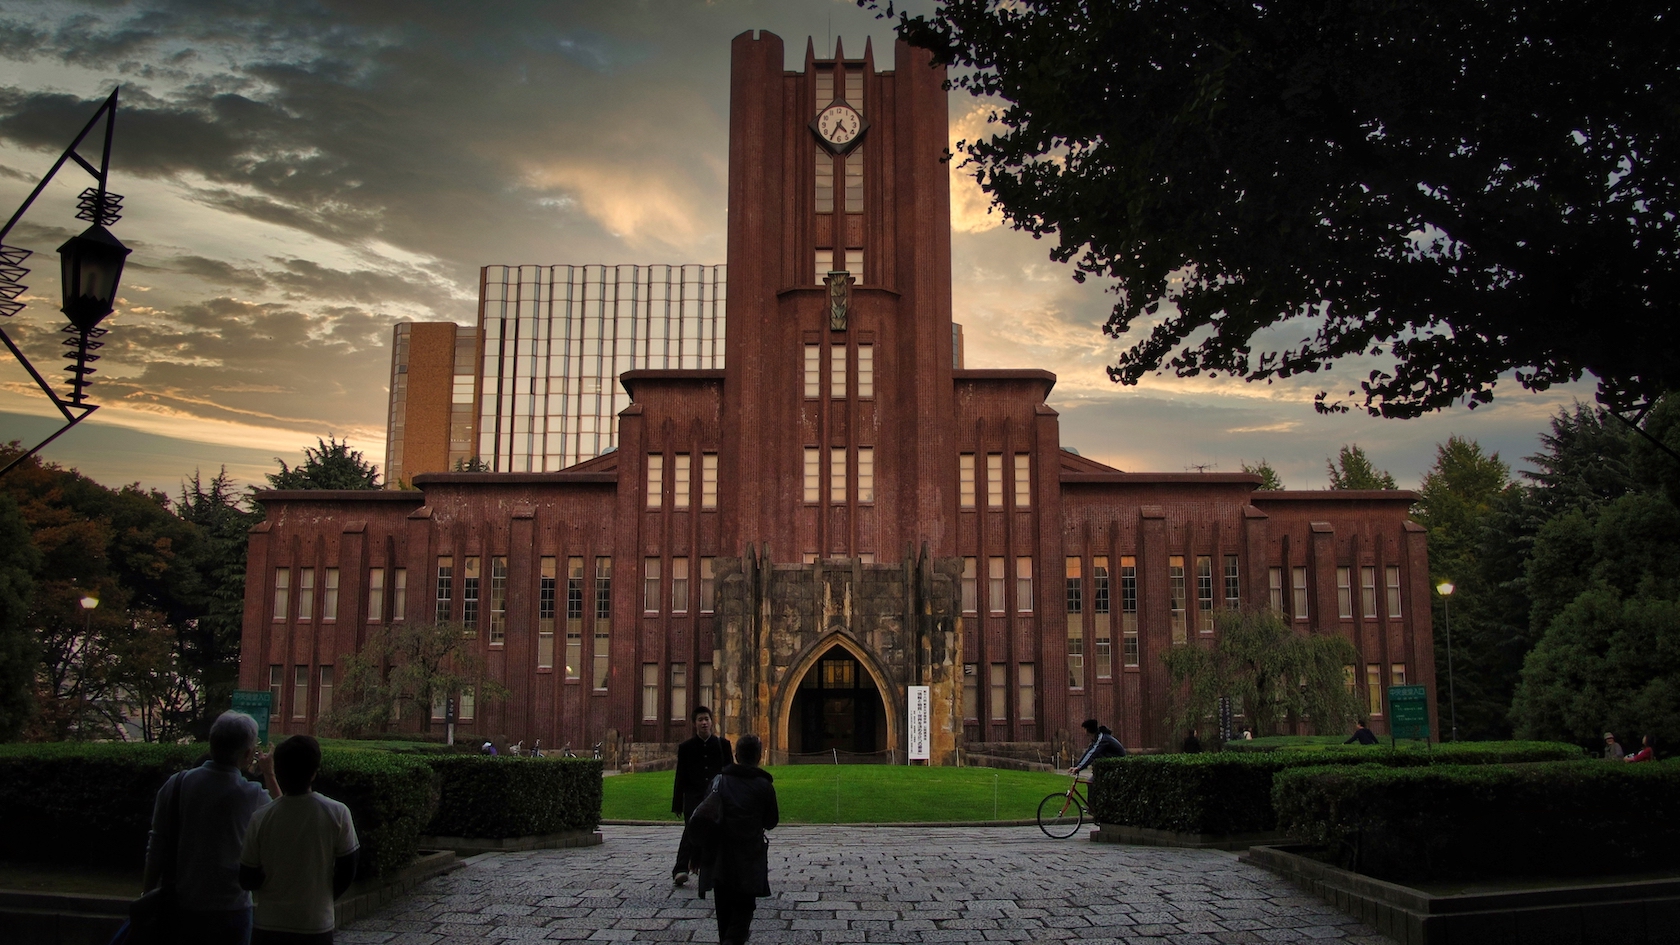 University of Tokyo, Komaba I Campus Building 1, Japan. Photo by Miki Yoshihito on Flickr.